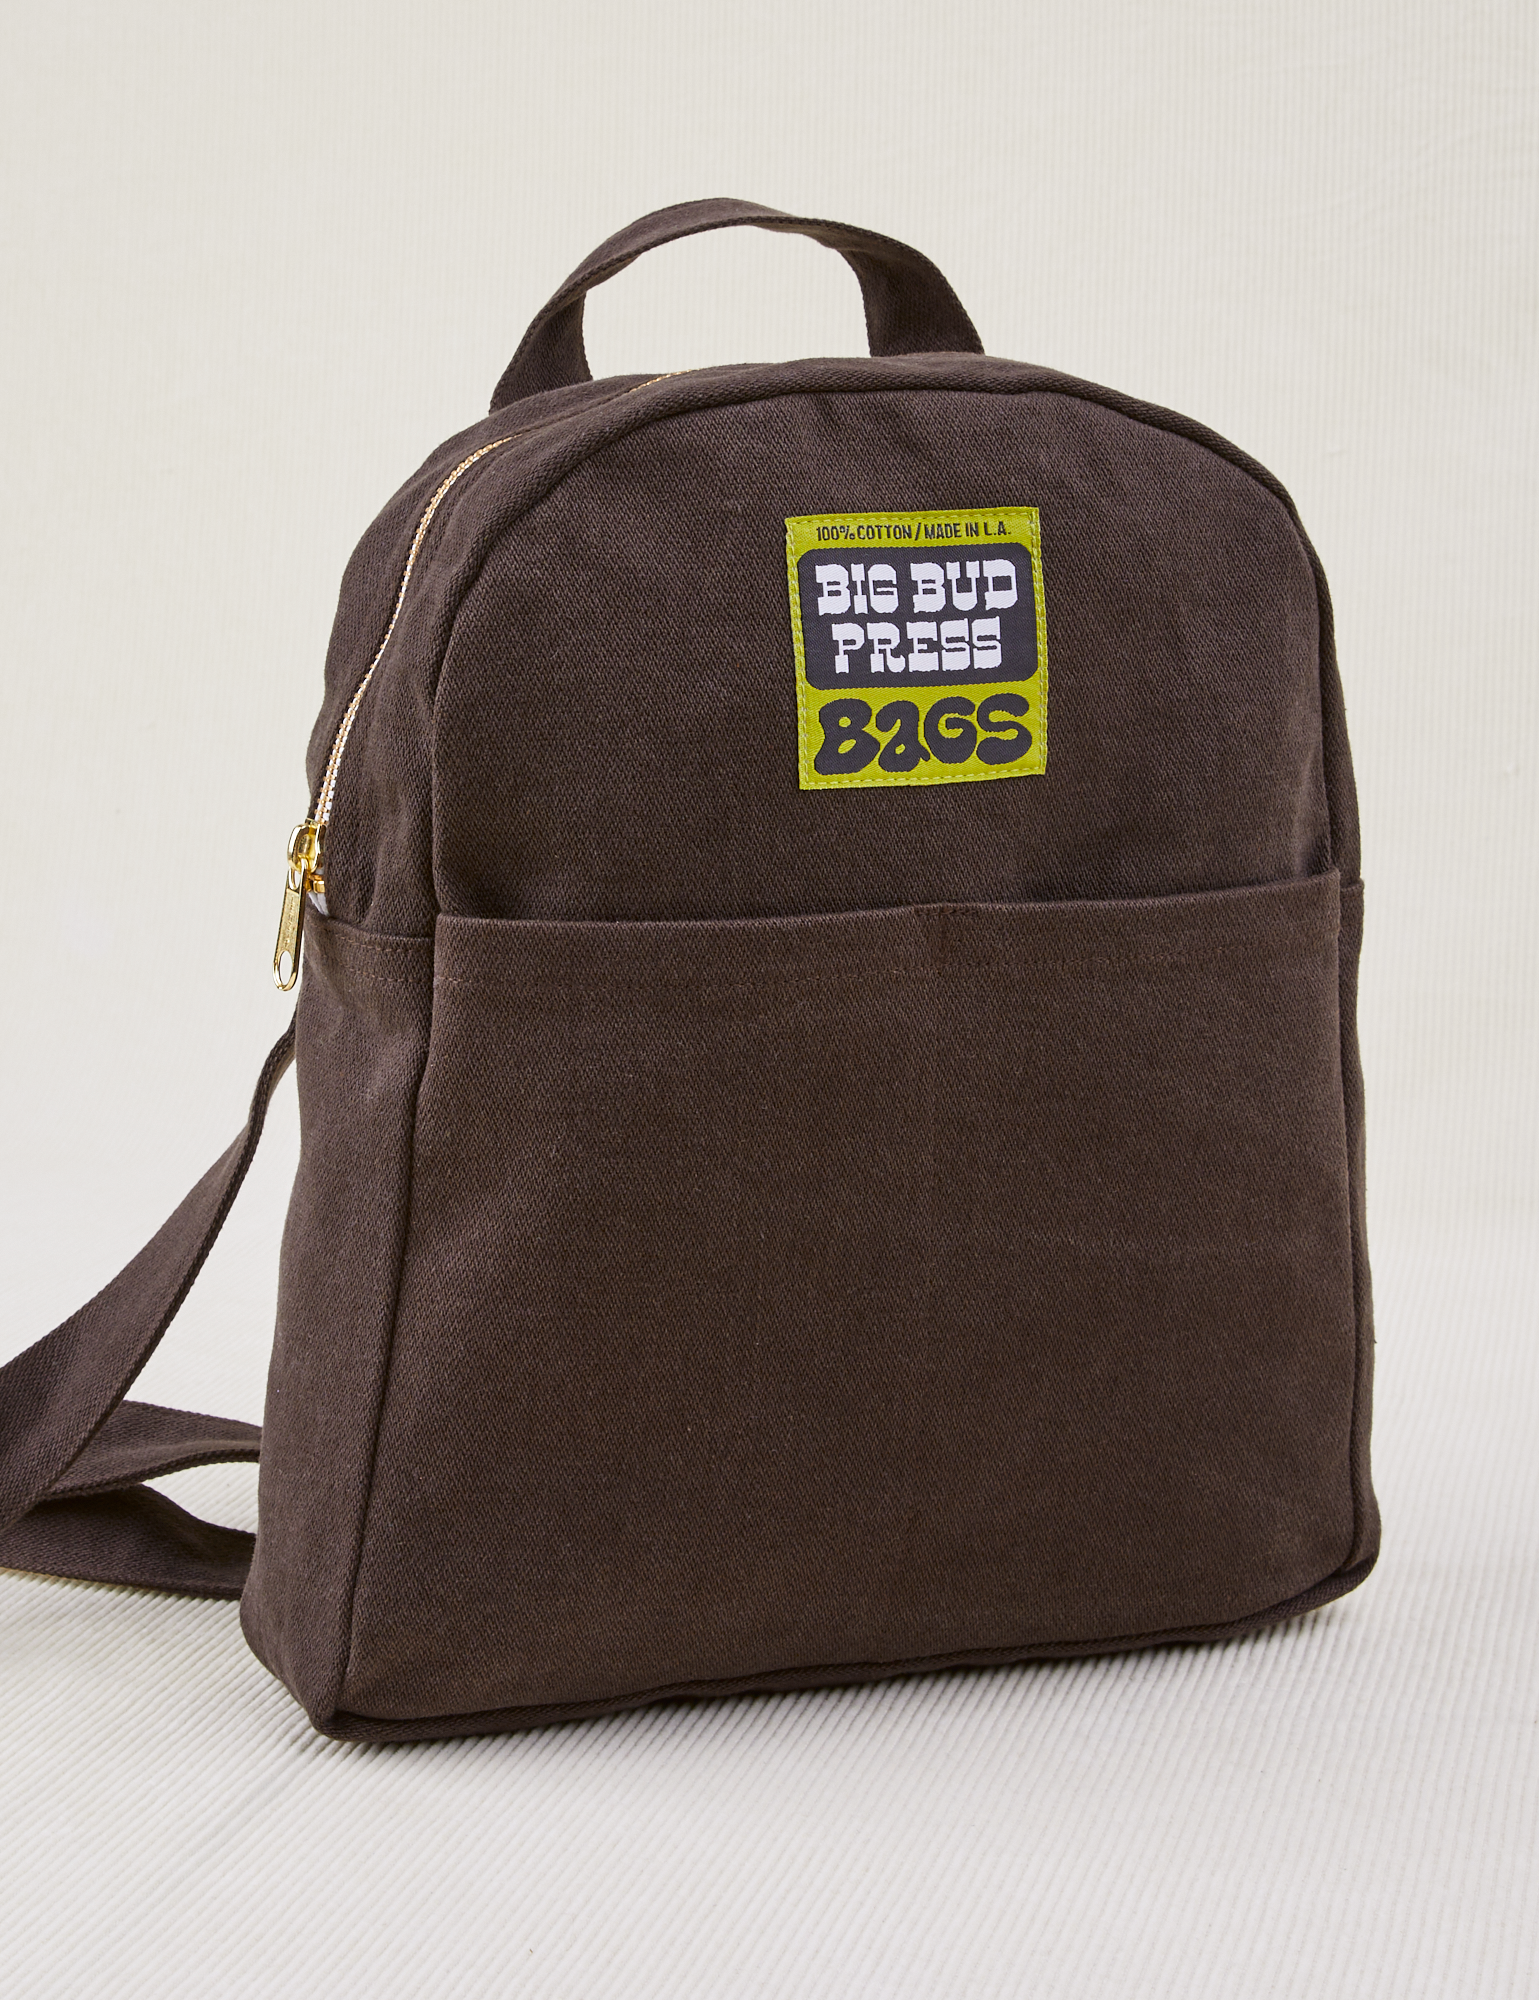 Mini Backpack in Espresso Brown